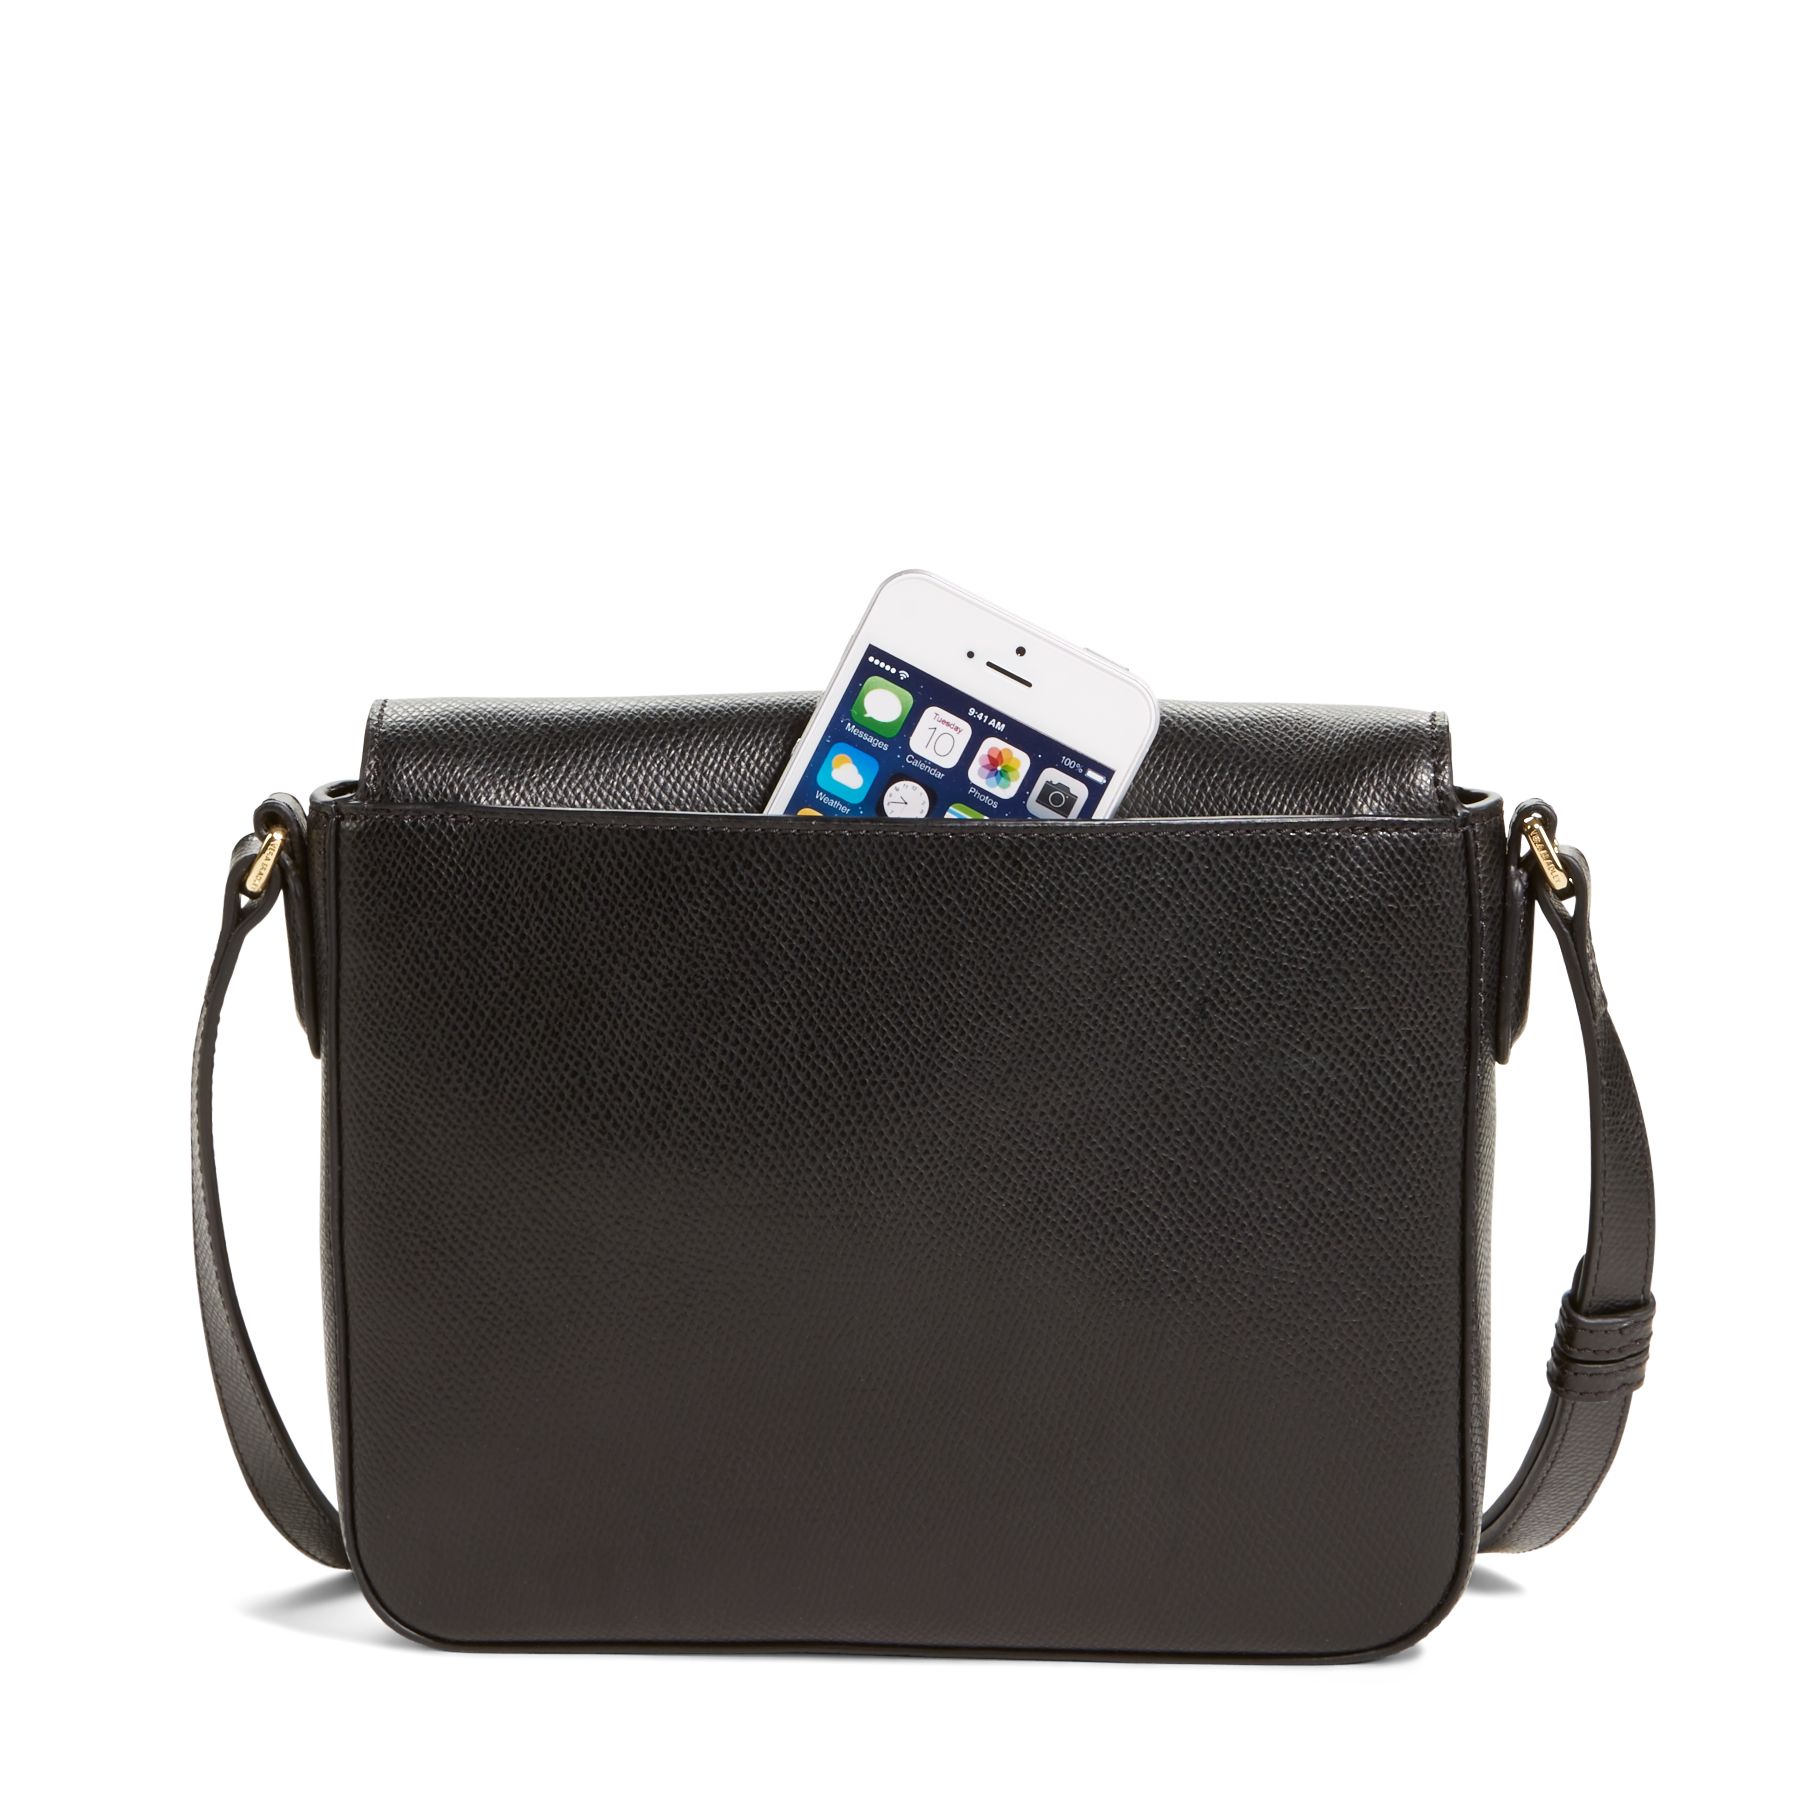 Vera Bradley Leather Twice as Nice Crossbody Bag | eBay